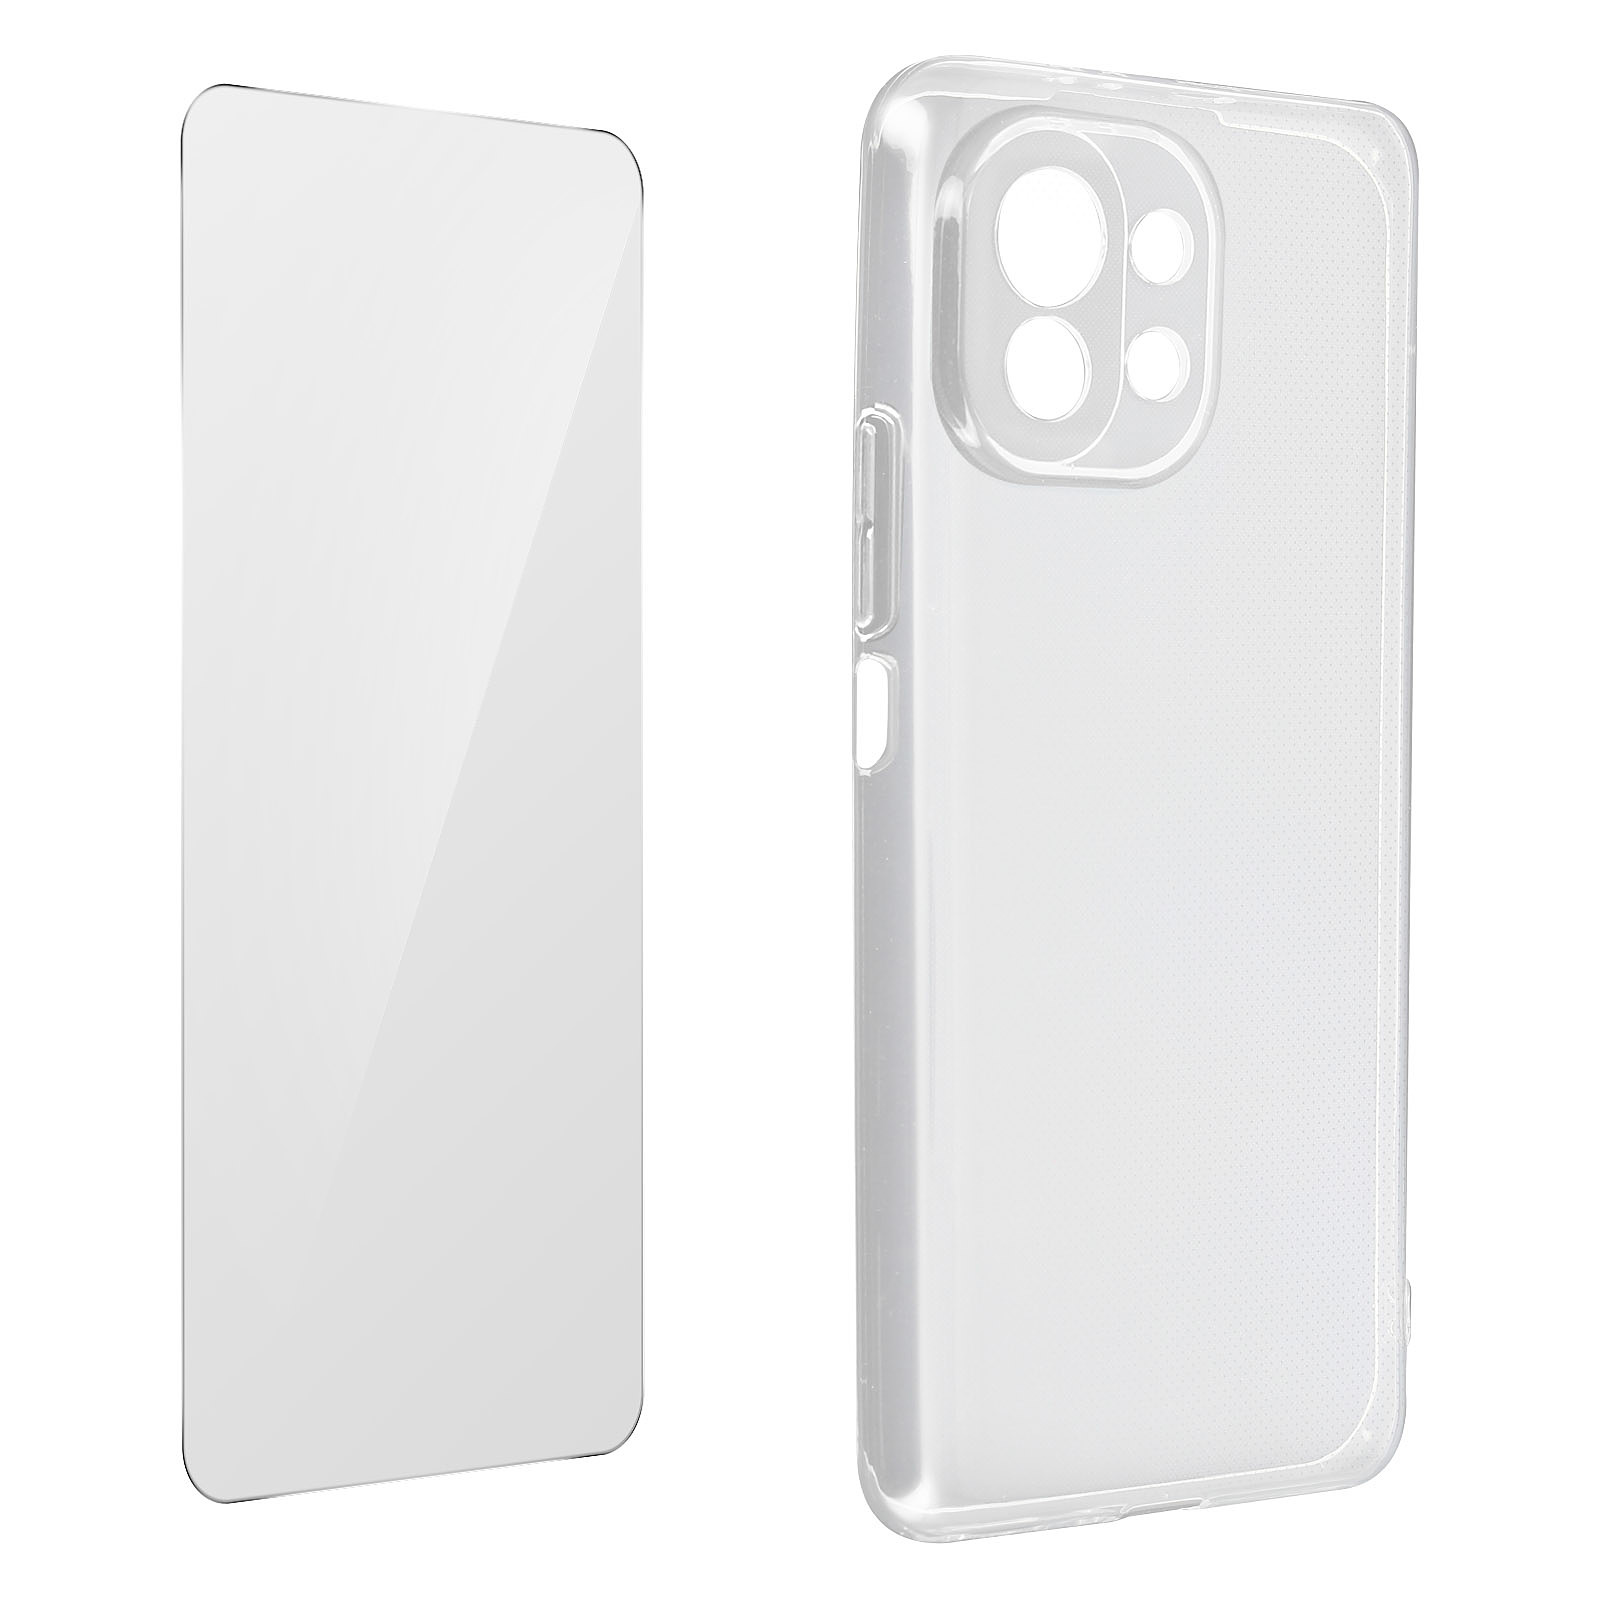 Avizar Coque pour Xiaomi Mi 11 Lite et Mi 11 Lite 5G Souple et Film Verre Trempe Durete 9H Transparent - Coque telephone Avizar